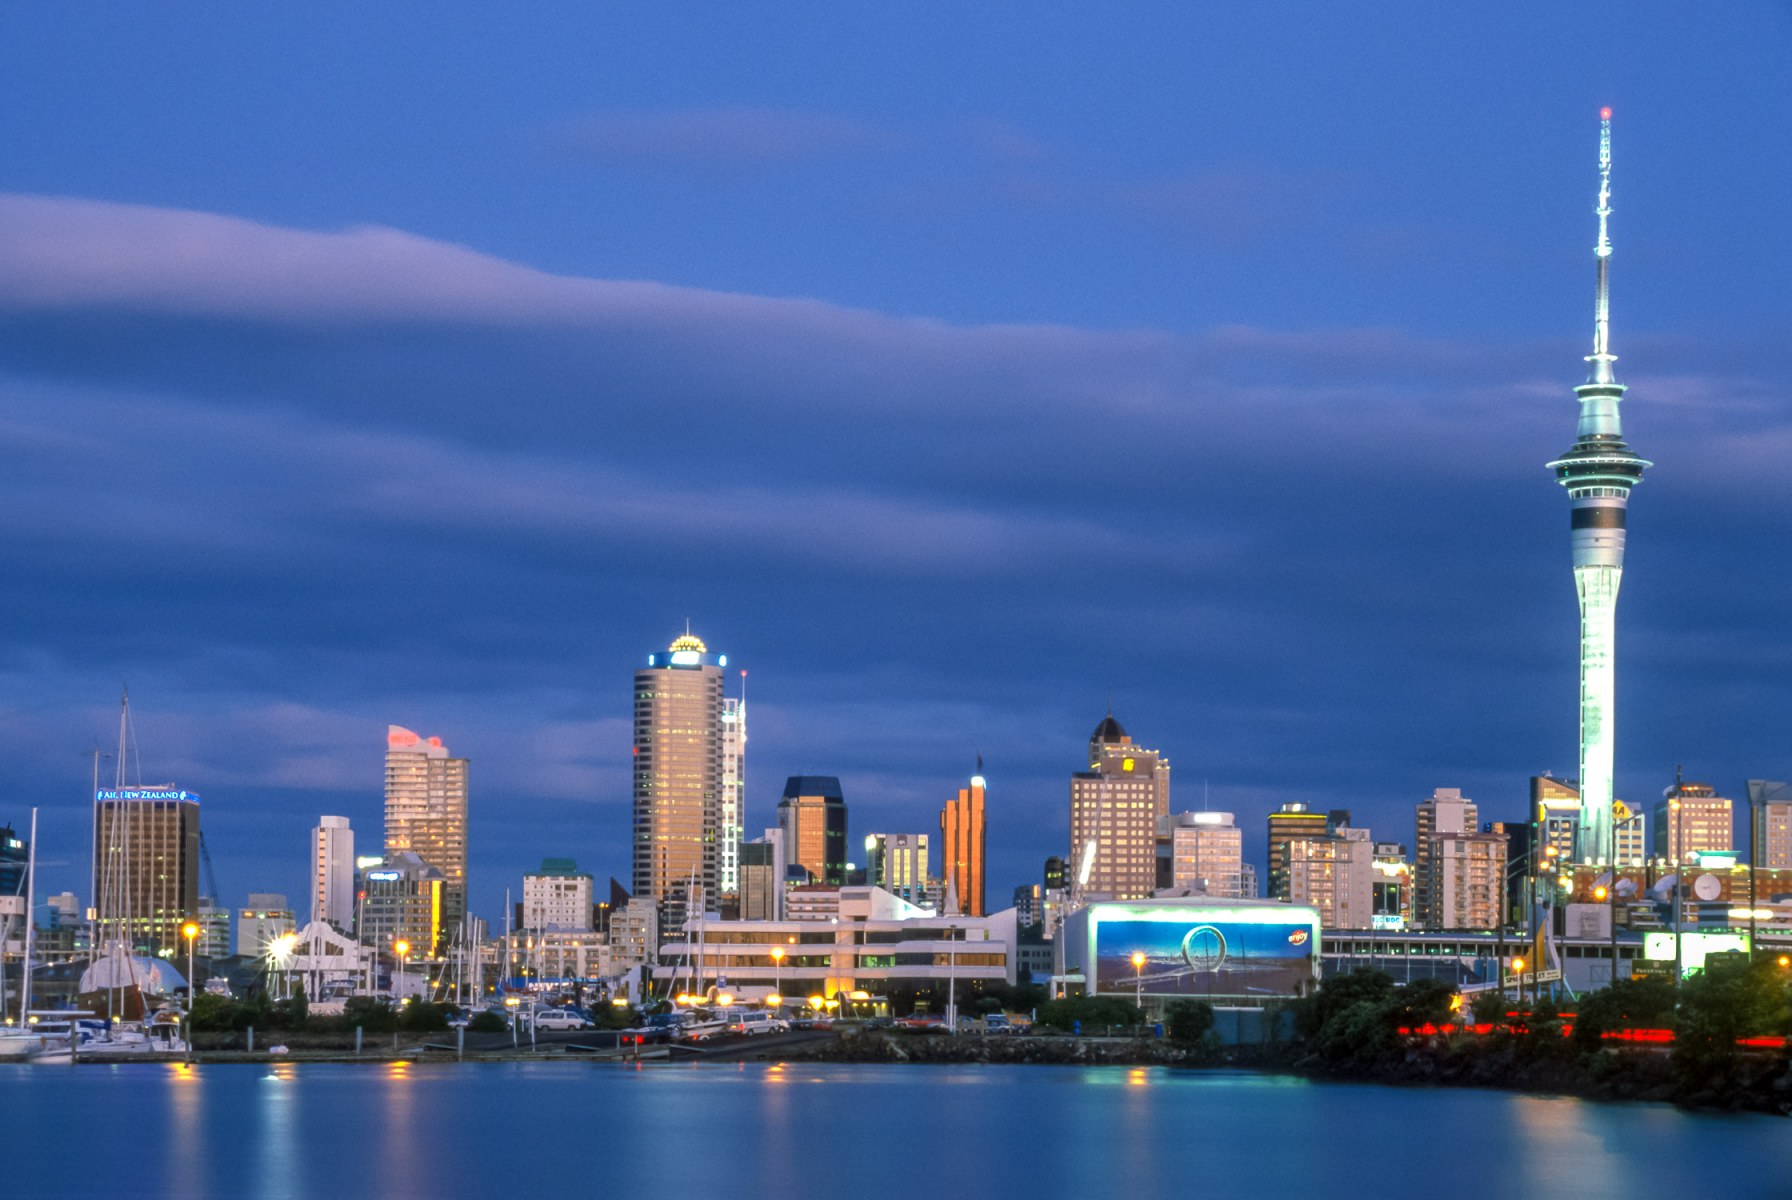 Evening over the Auckland skyline